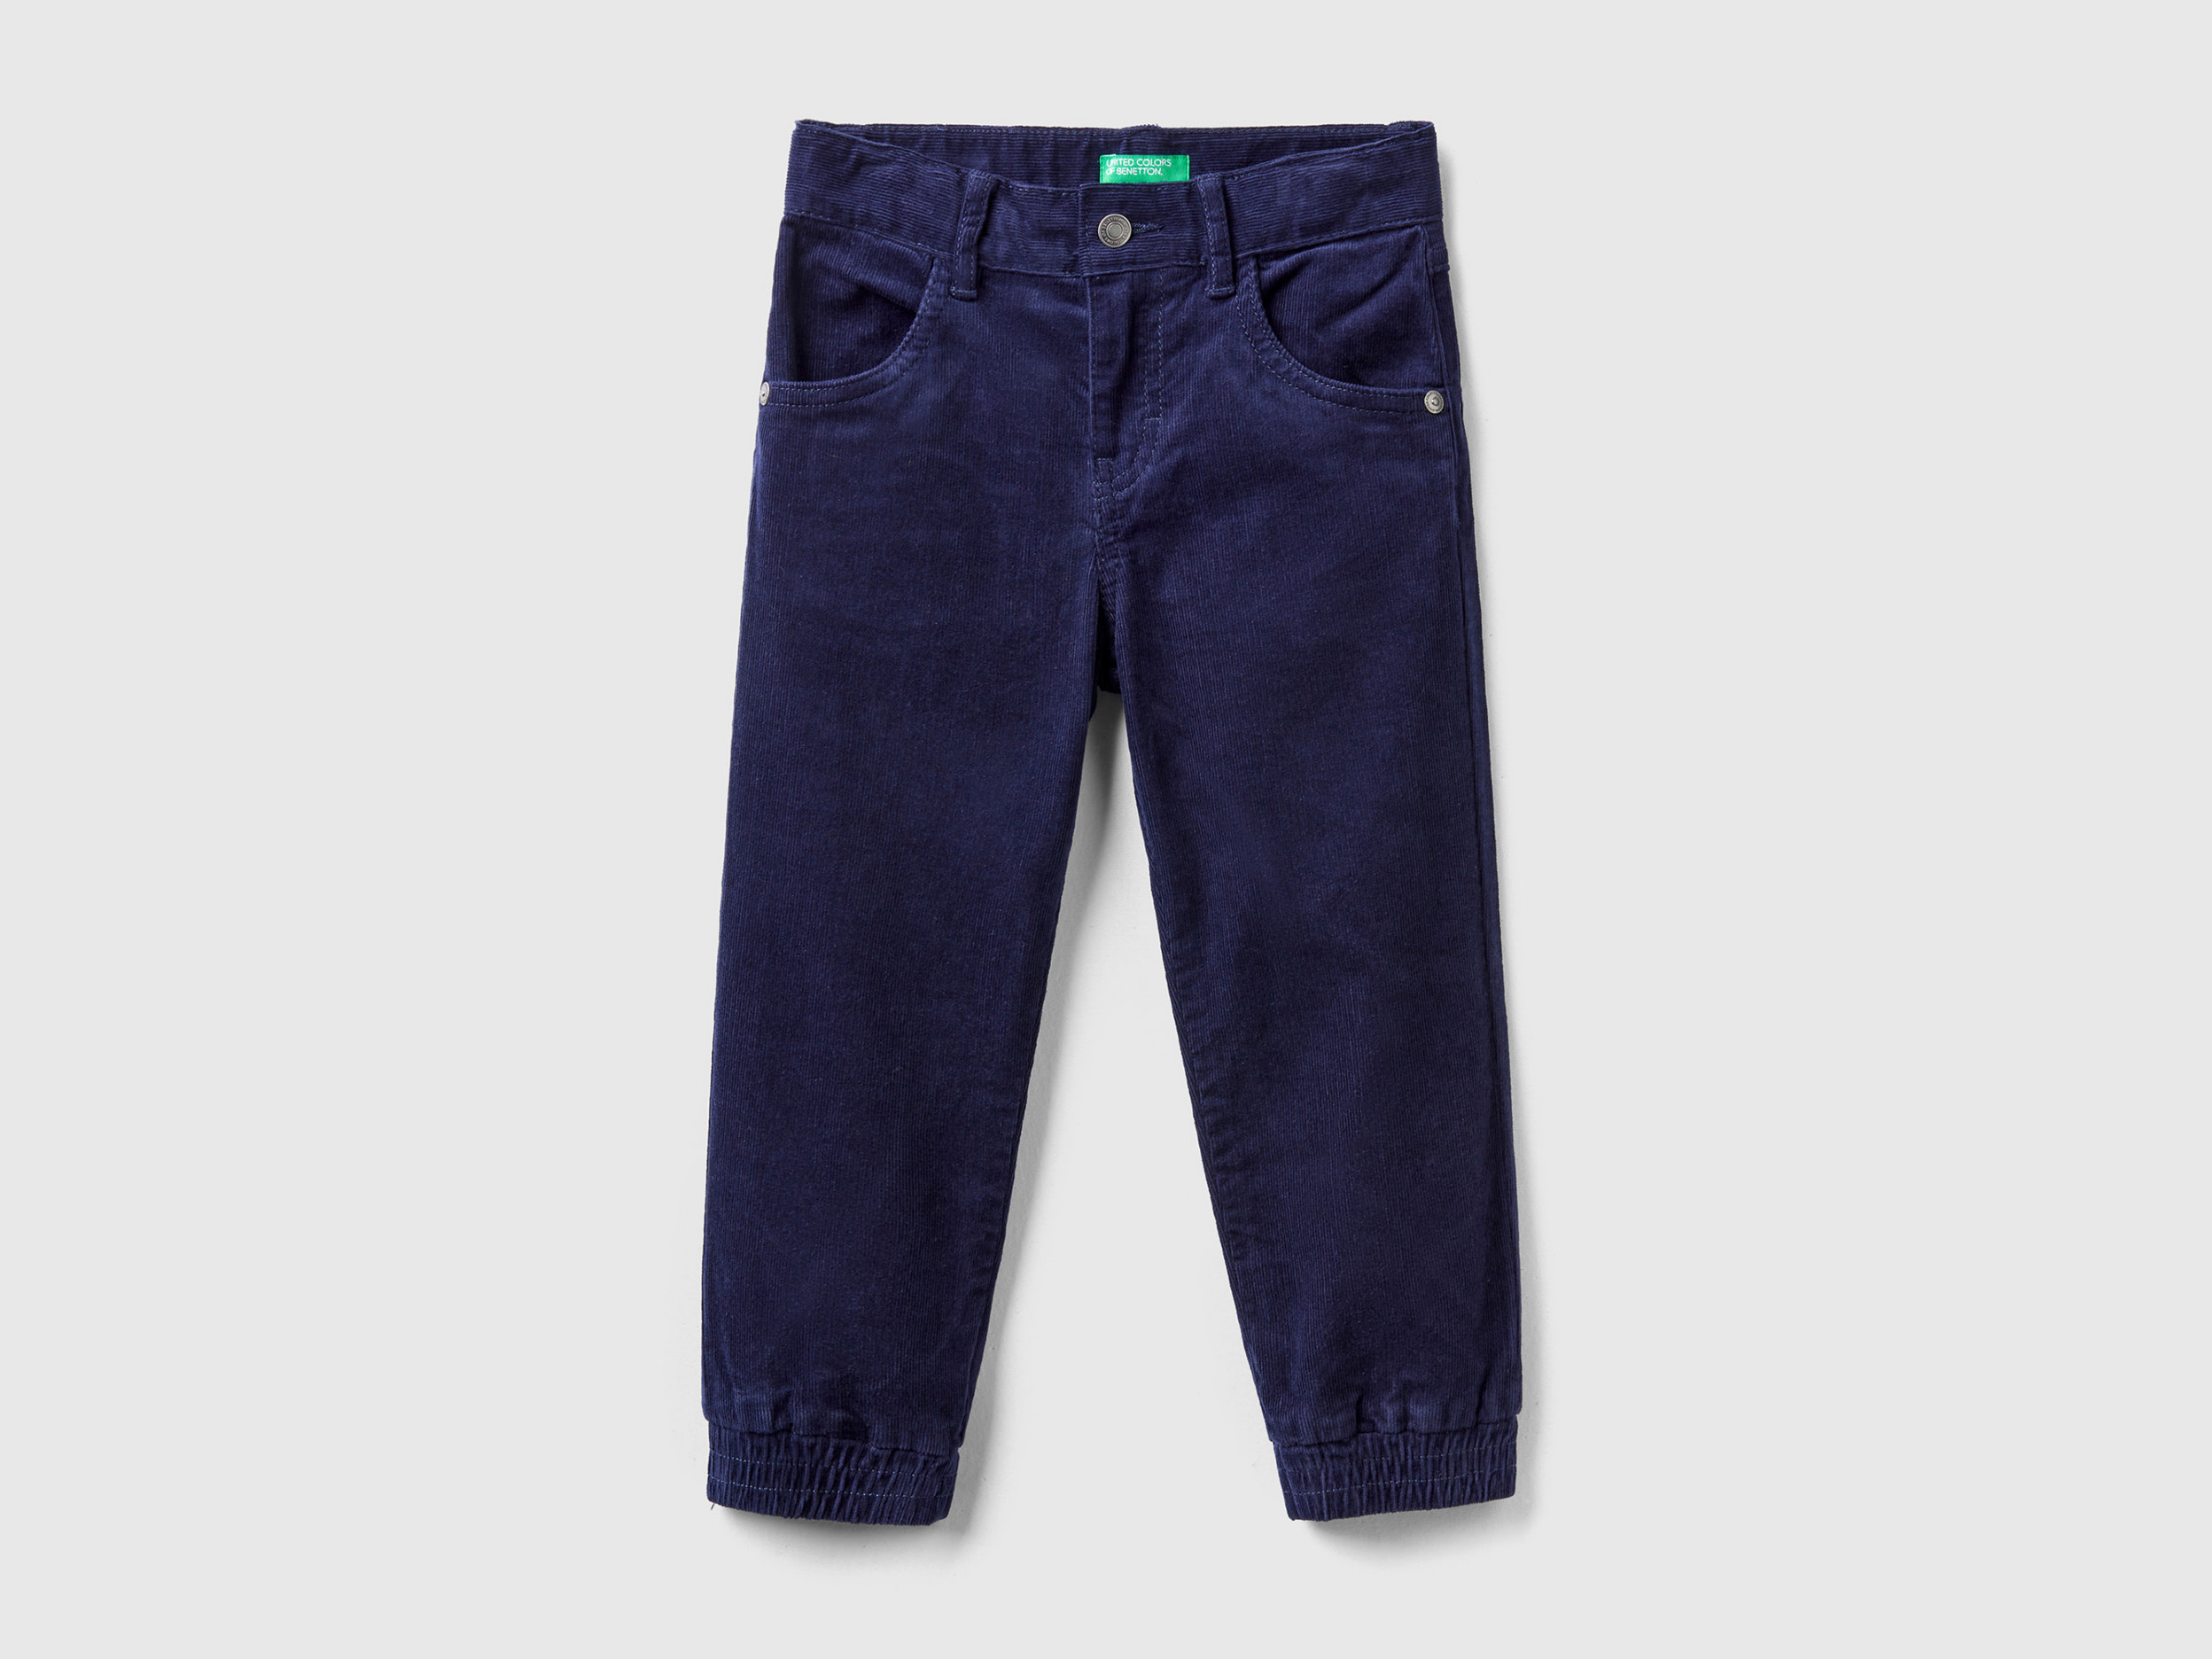 Benetton, Stretch Corduroy Trousers, size 18-24, Dark Blue, Kids